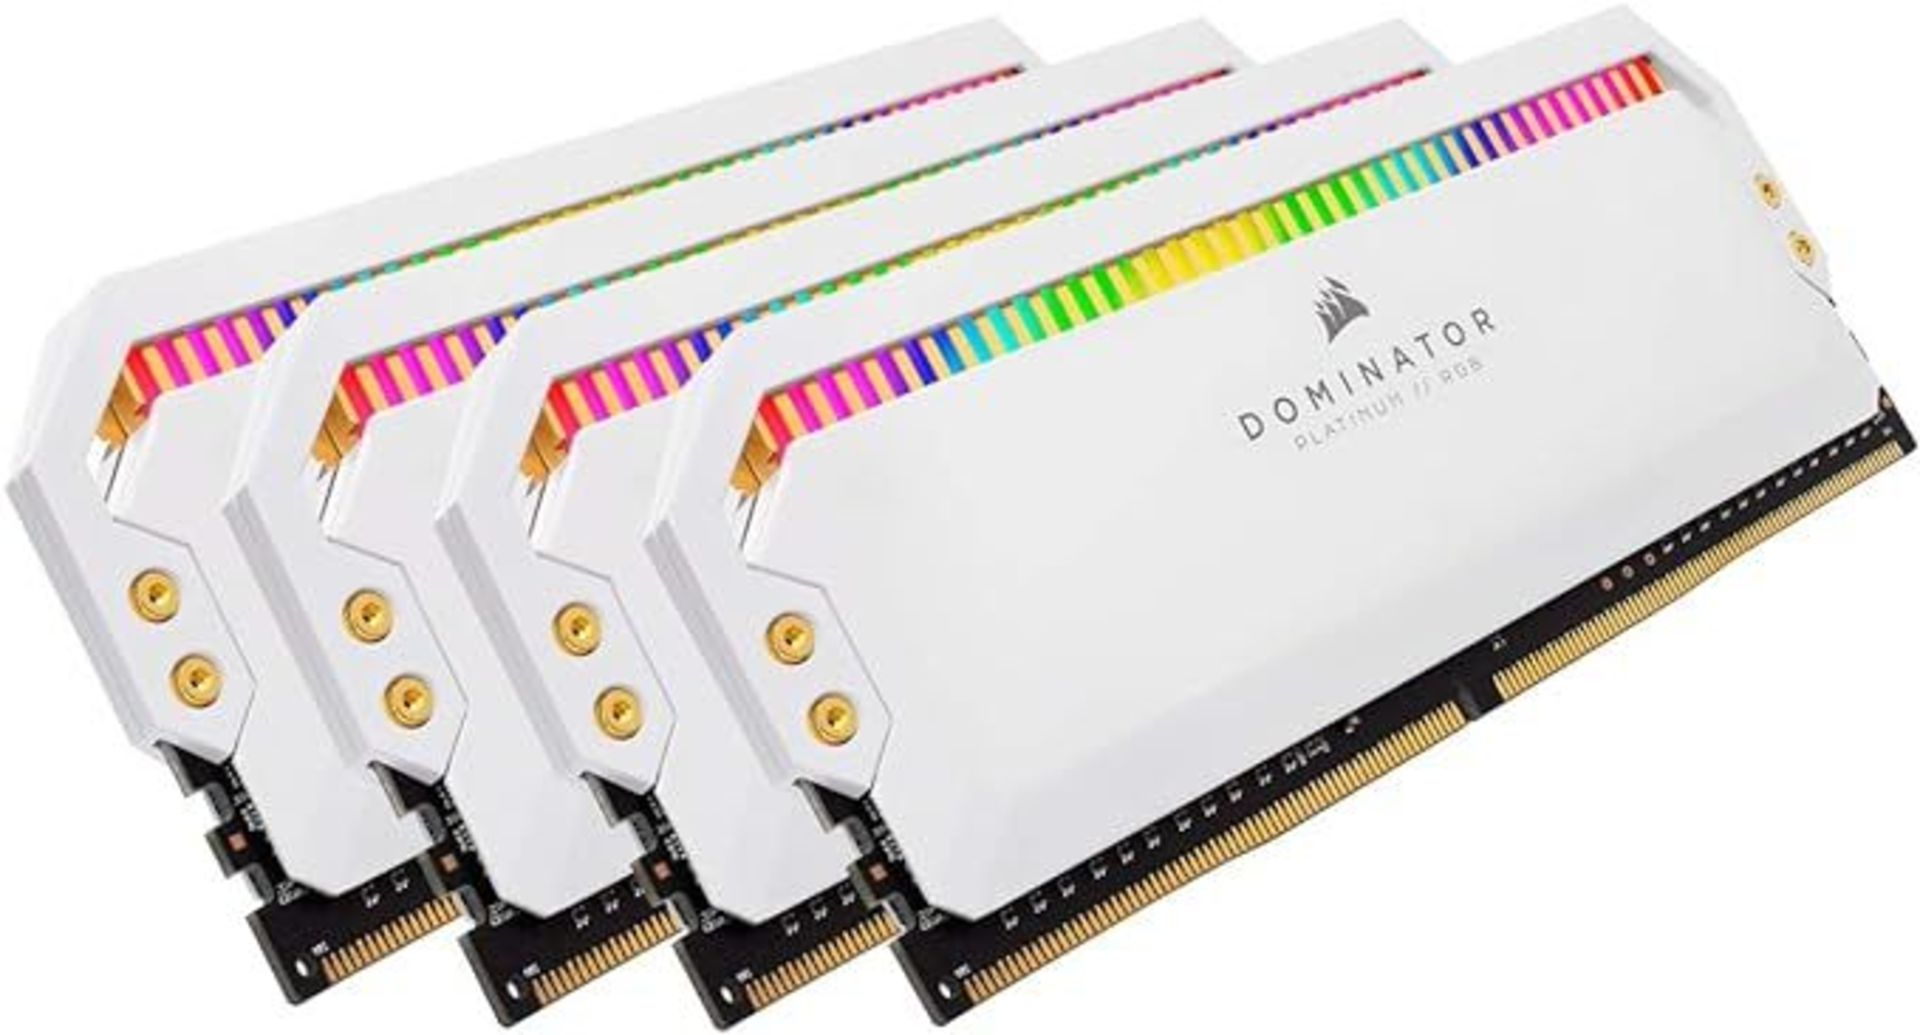 Corsair Dominator Platinum RGB 32GB (4x8GB) DDR4 3200MHz C16, RGB LED Desktop Memory (High